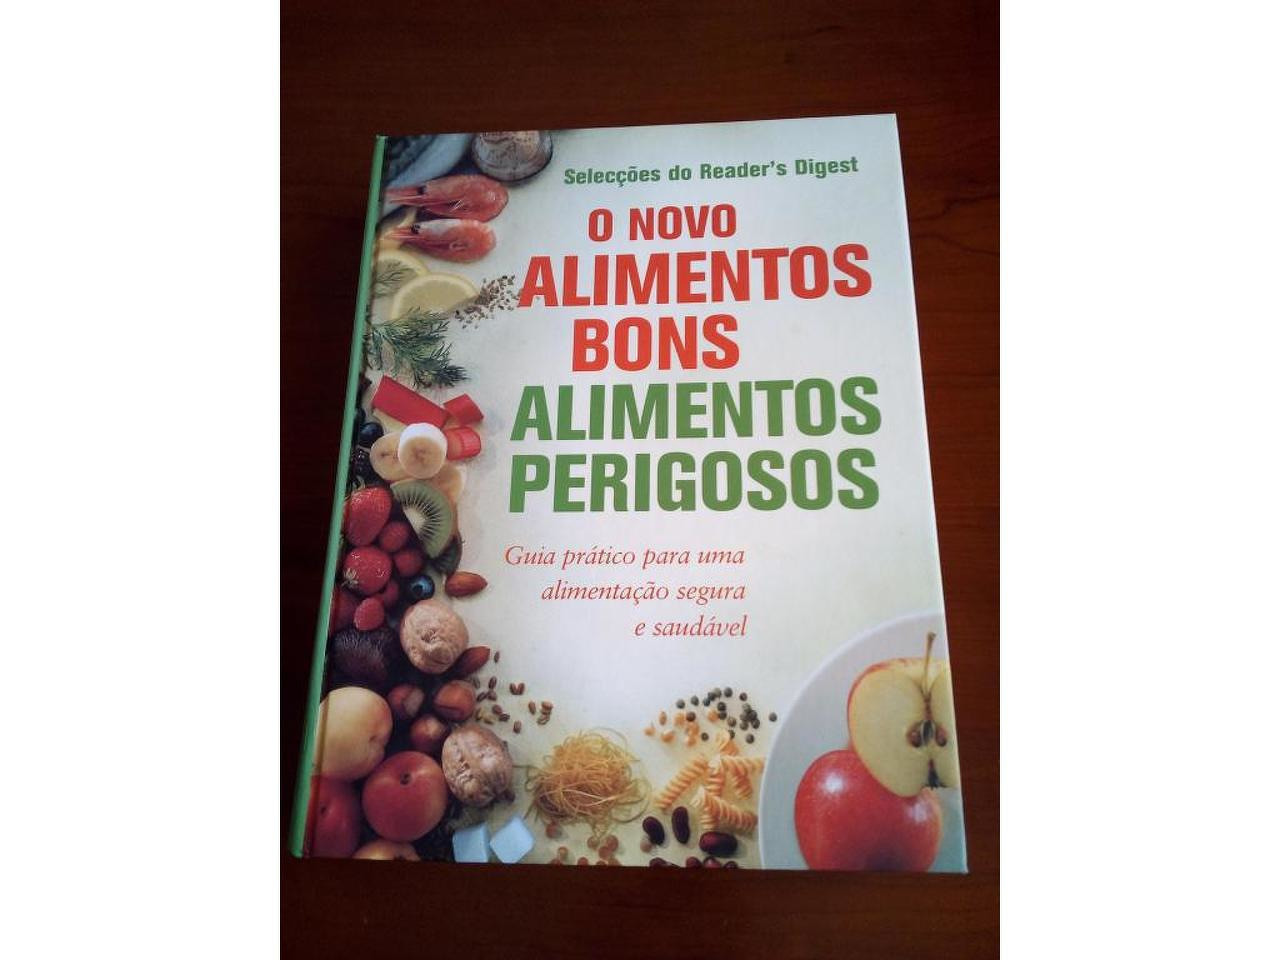 Livro "O Novo Alimentos bons e Alimentos perigosos" - 1